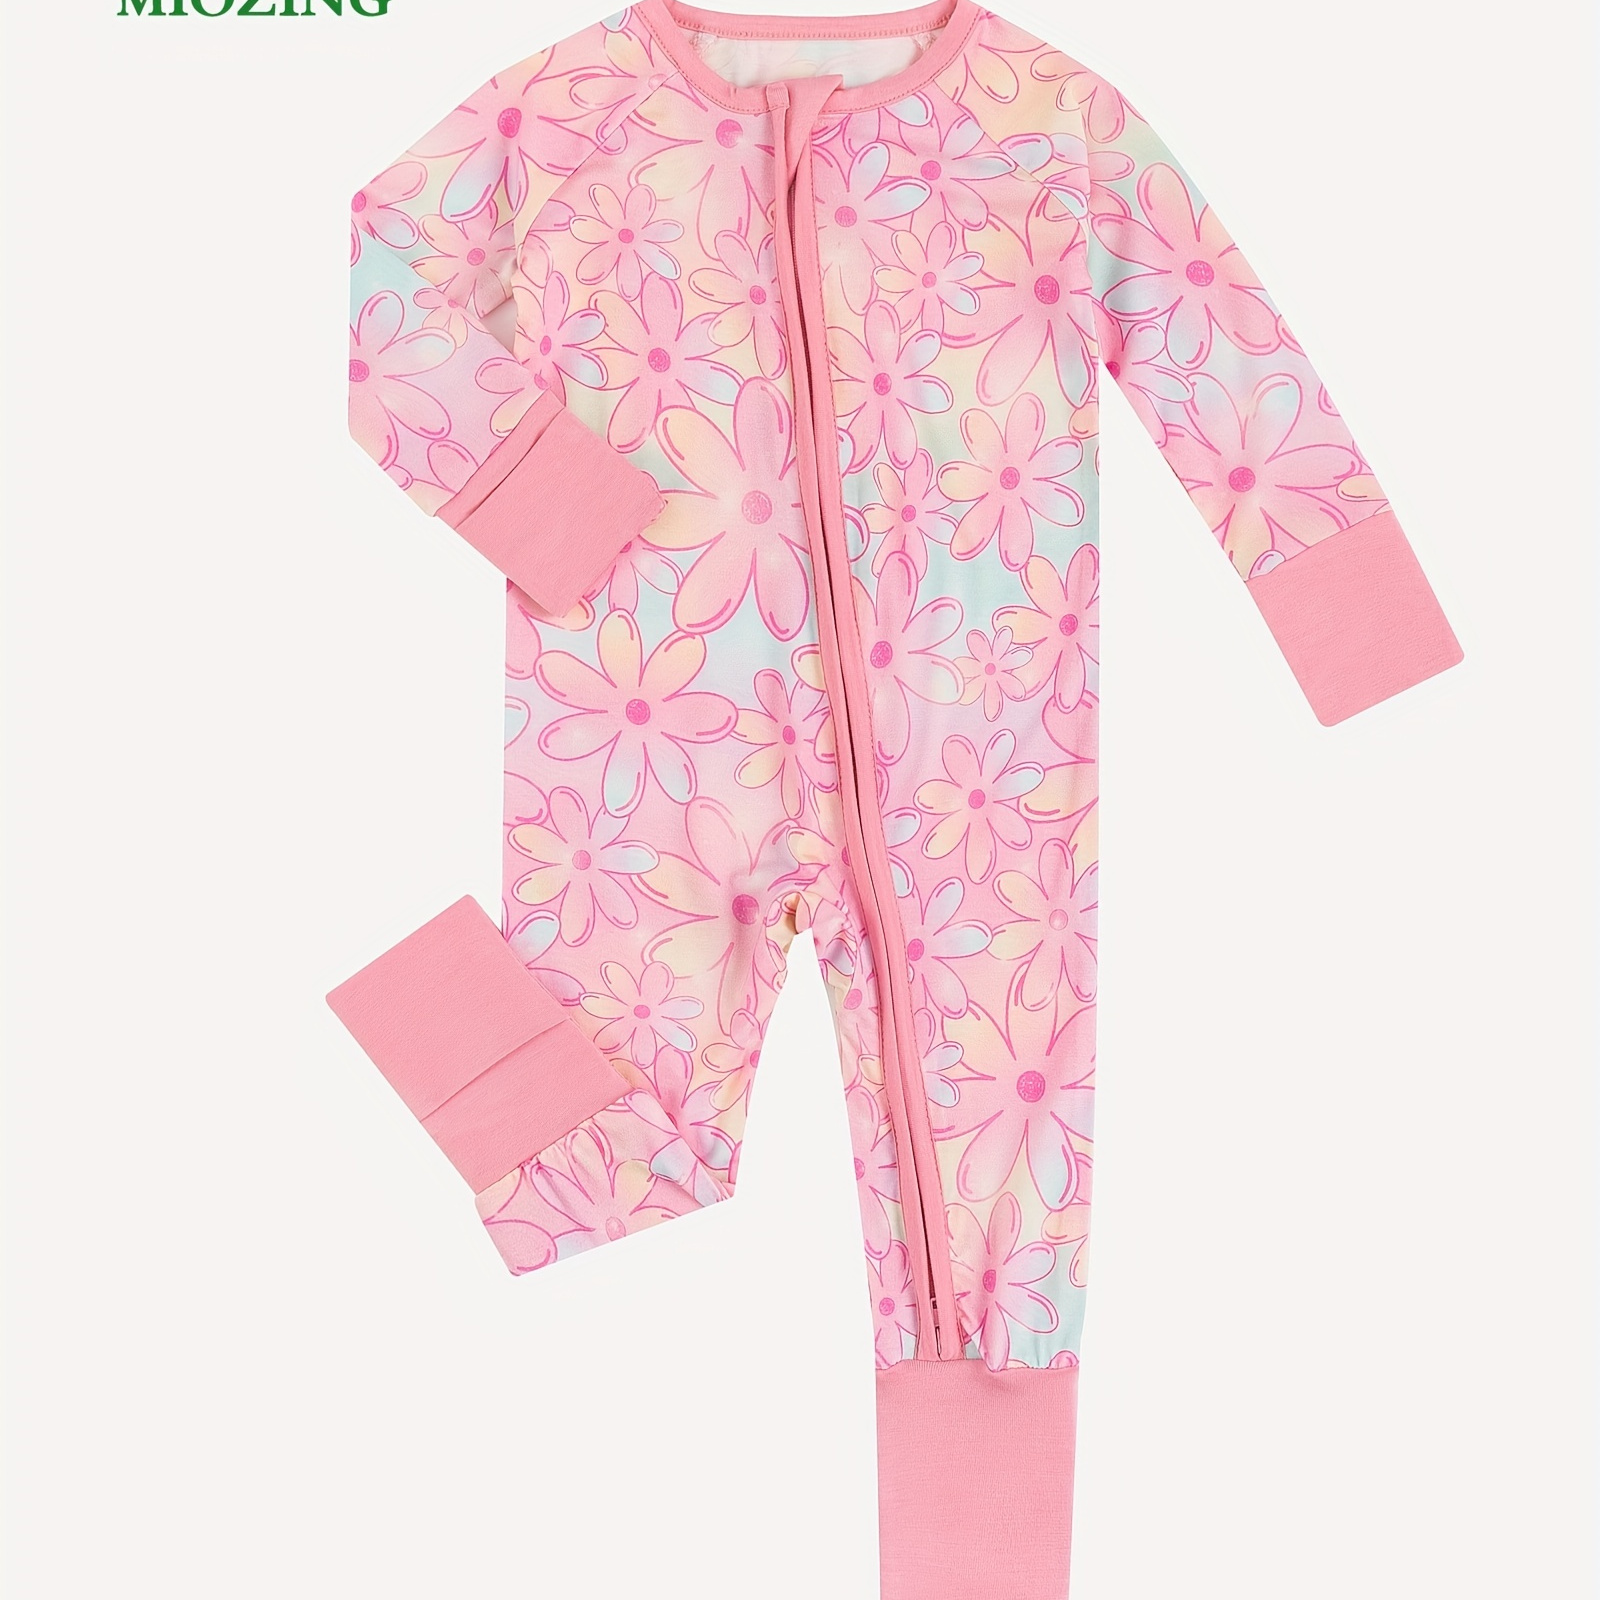 

Miozing Bamboo Fiber Bodysuit For Infants, Color Gradient Flower Pattern Long Sleeve Onesie, Baby Girl's Clothing